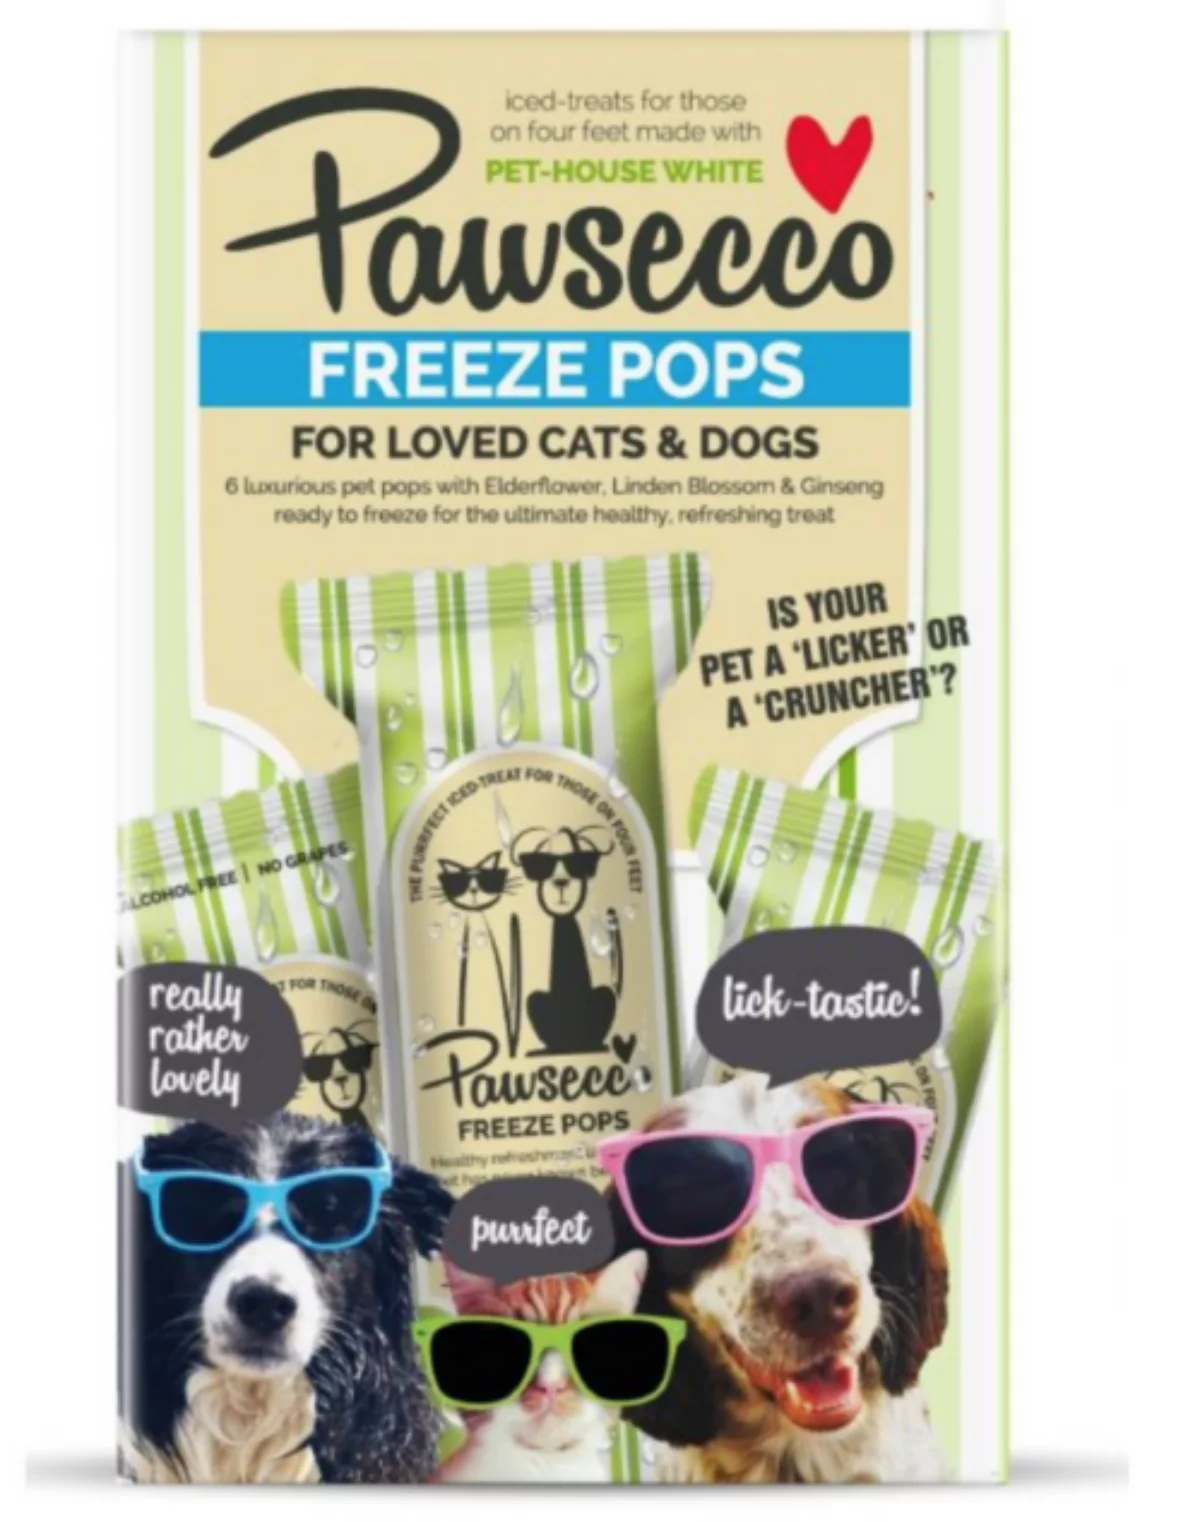 Tasty pawsecco freeze pops